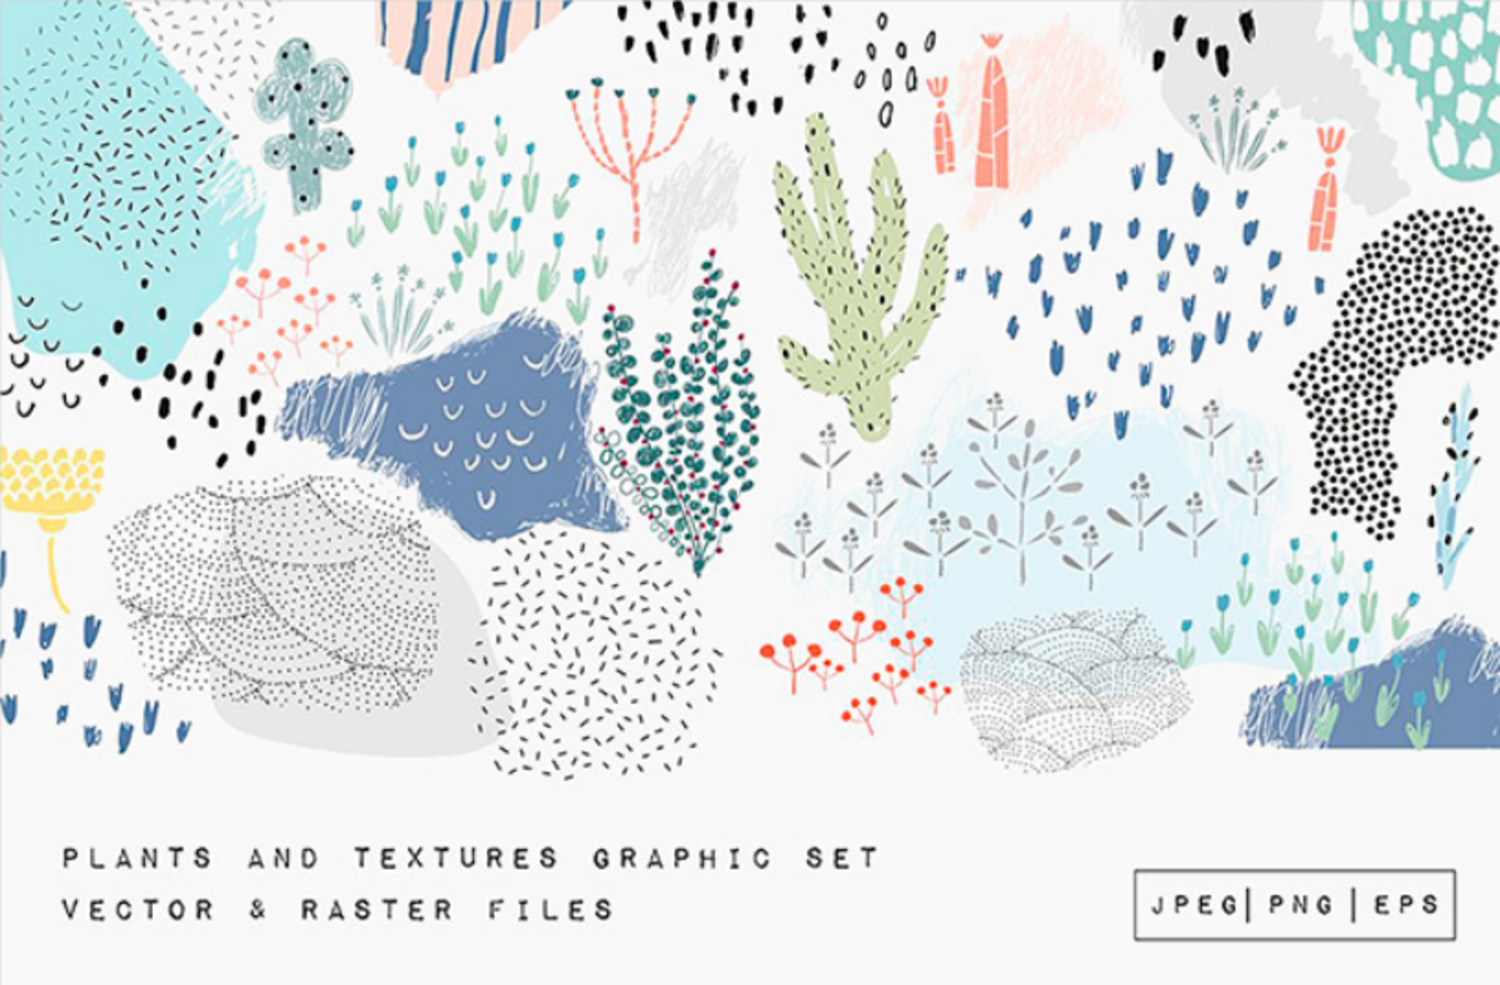 36 矢量花卉海藻植物纹理插画元素素材包Vector Plants and Textures